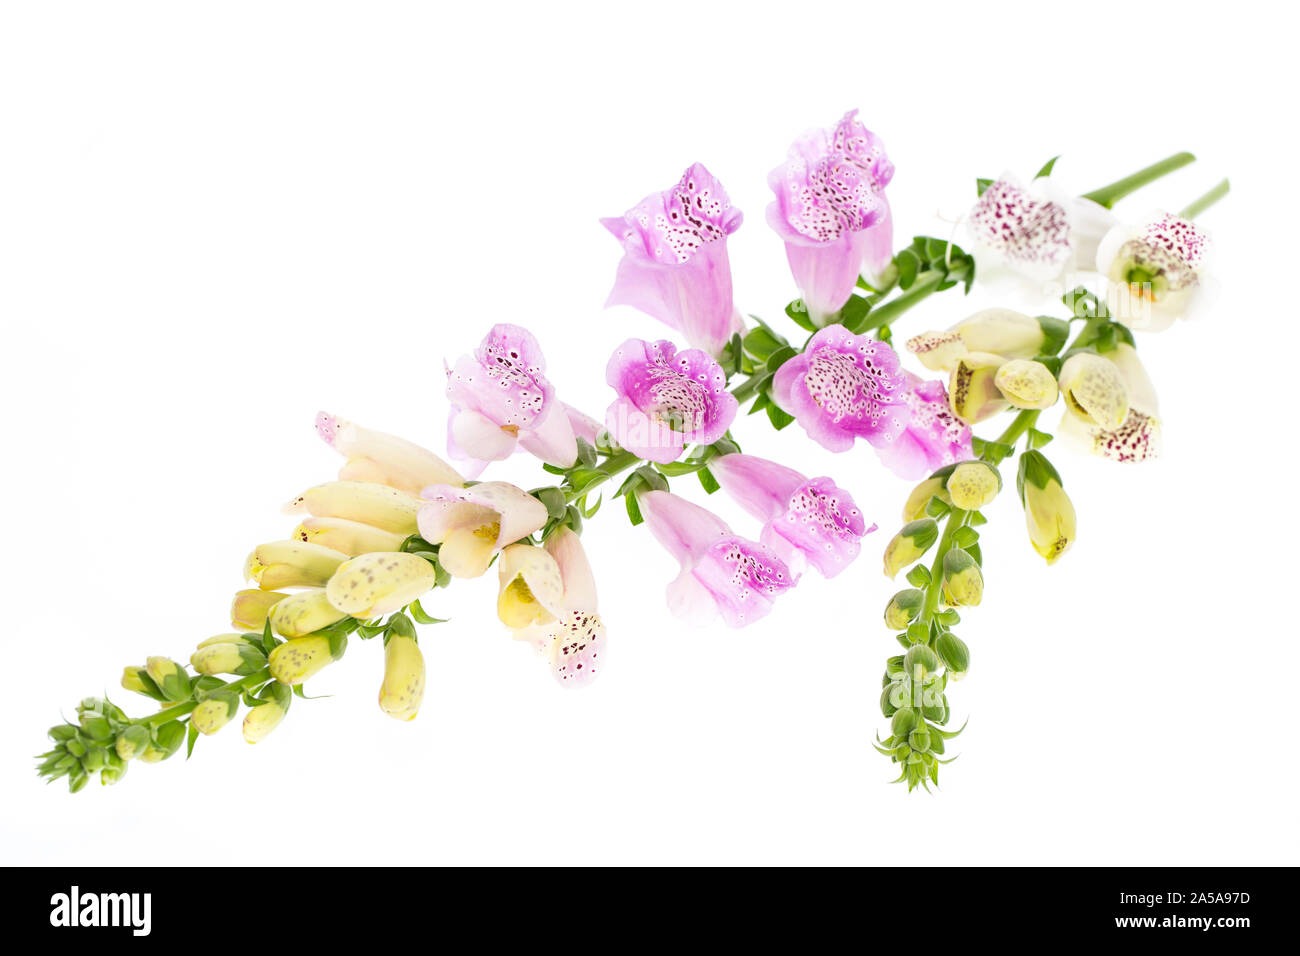 healing plants: Foxglove (Digitalis purpurea) - lying on white background Stock Photo